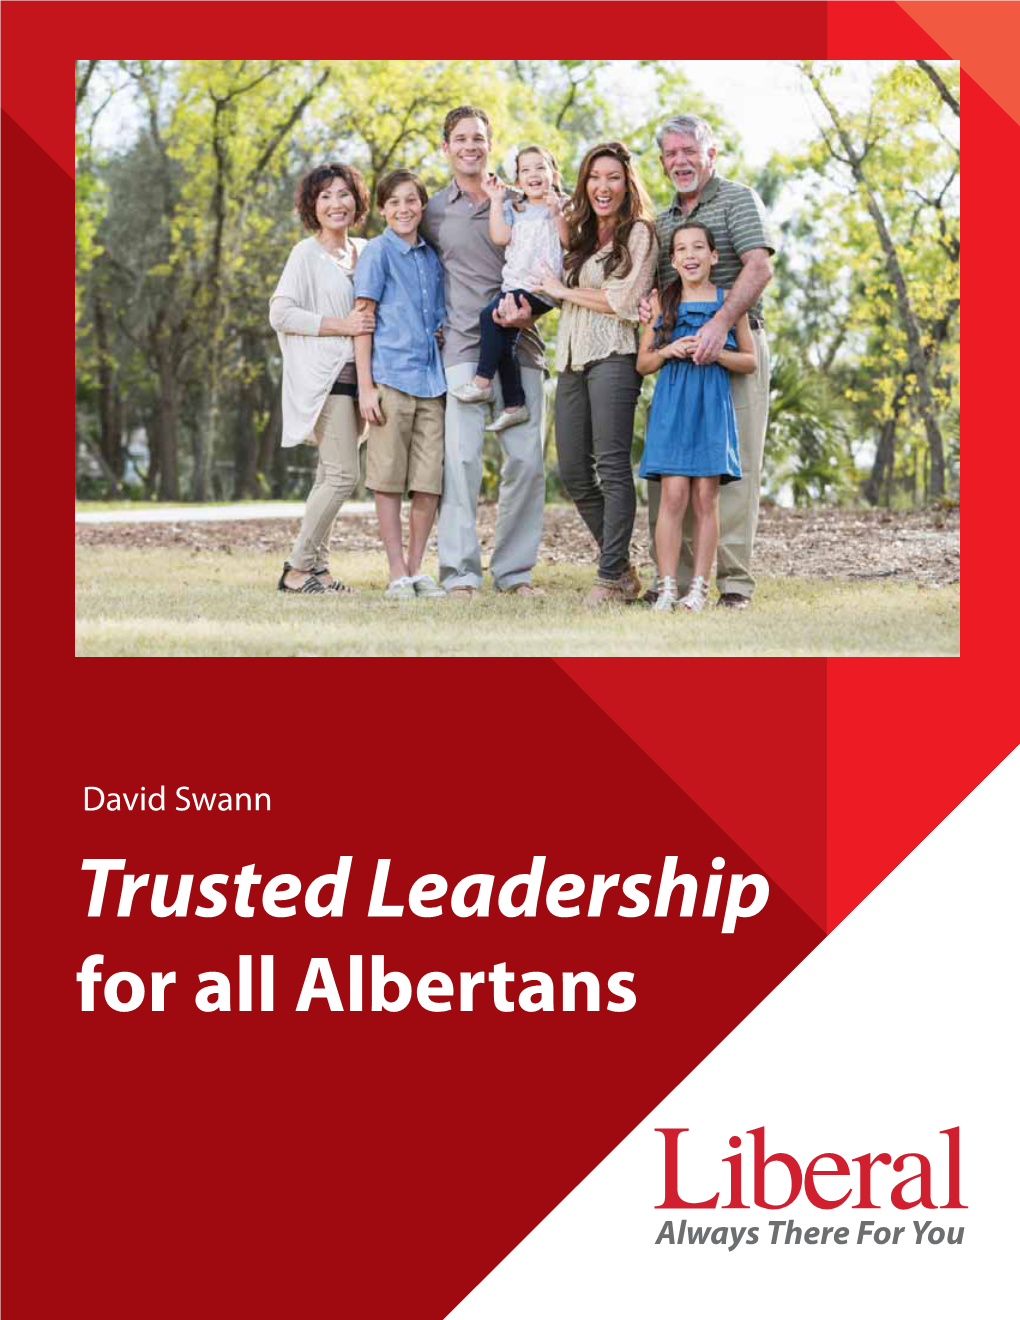 Alberta Liberal Policies, Visit Dear Friends